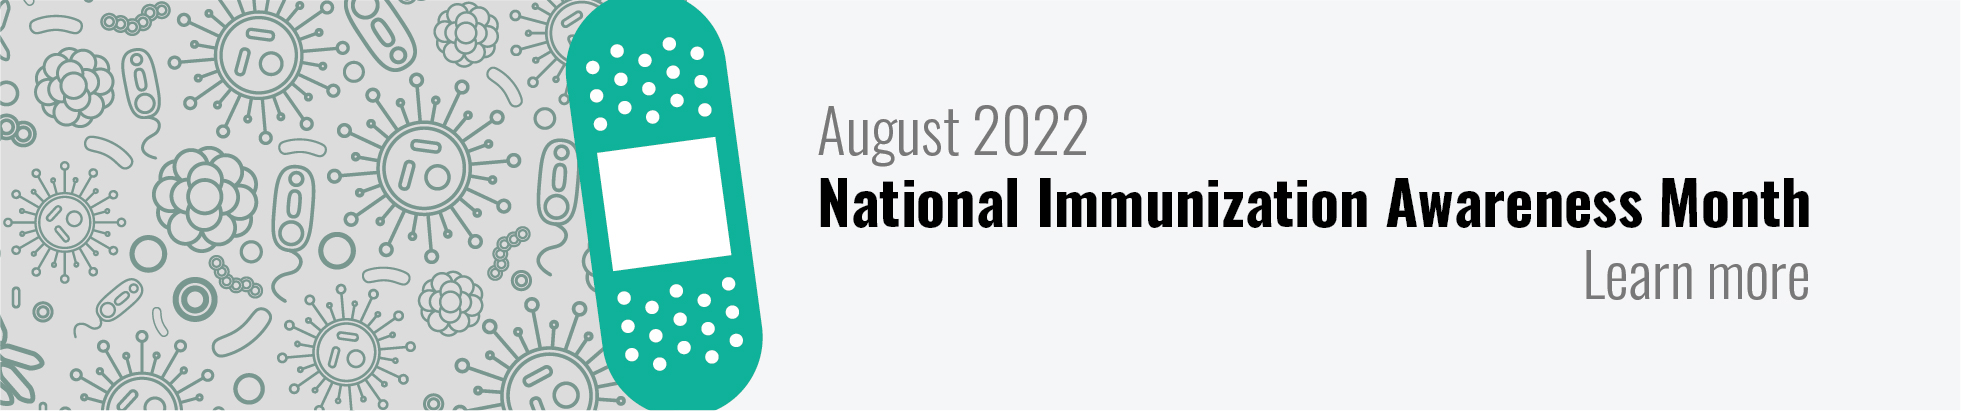 Immunization Awareness Month 2022